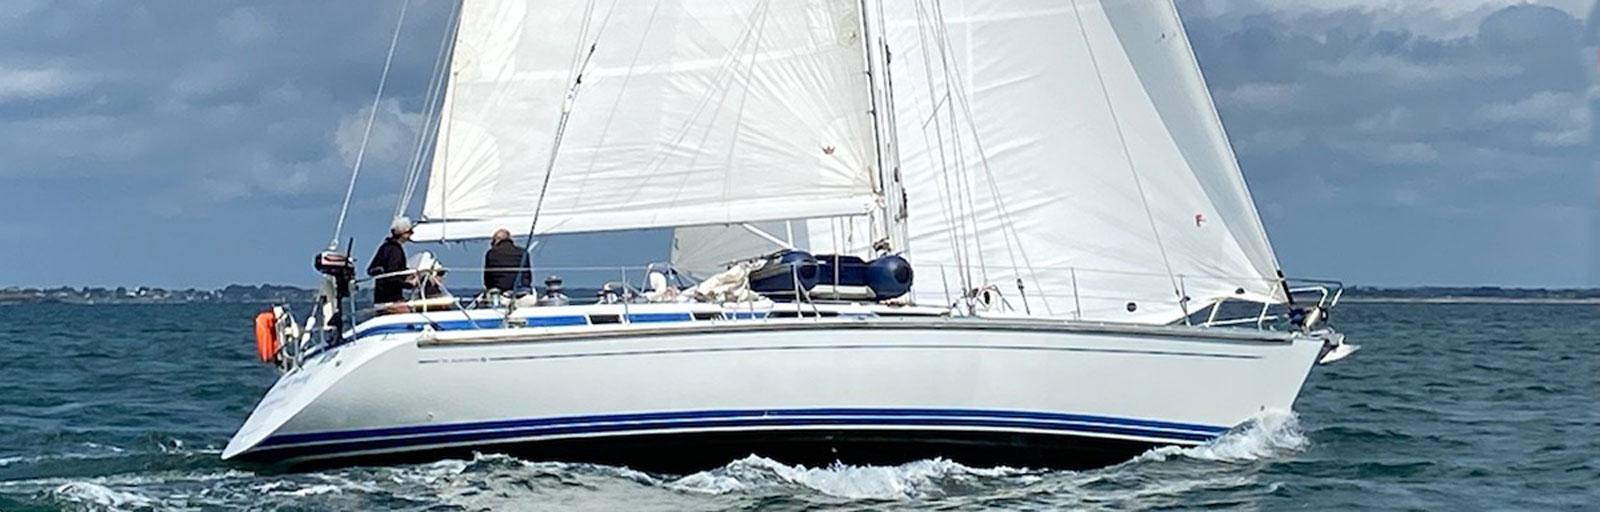 Grand Soleil 45 - AYC Yachtbroker